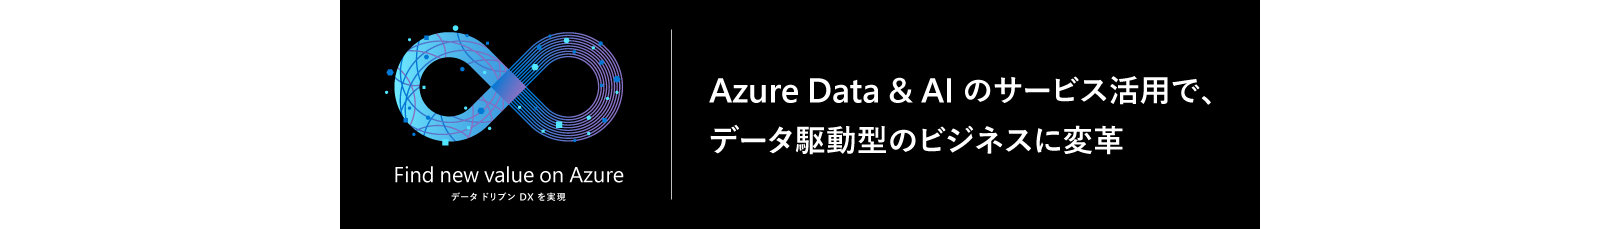 Find new value on Azure - Azure Data &AI のサービス活用で、データ駆動型のビジネスに変革のバナー